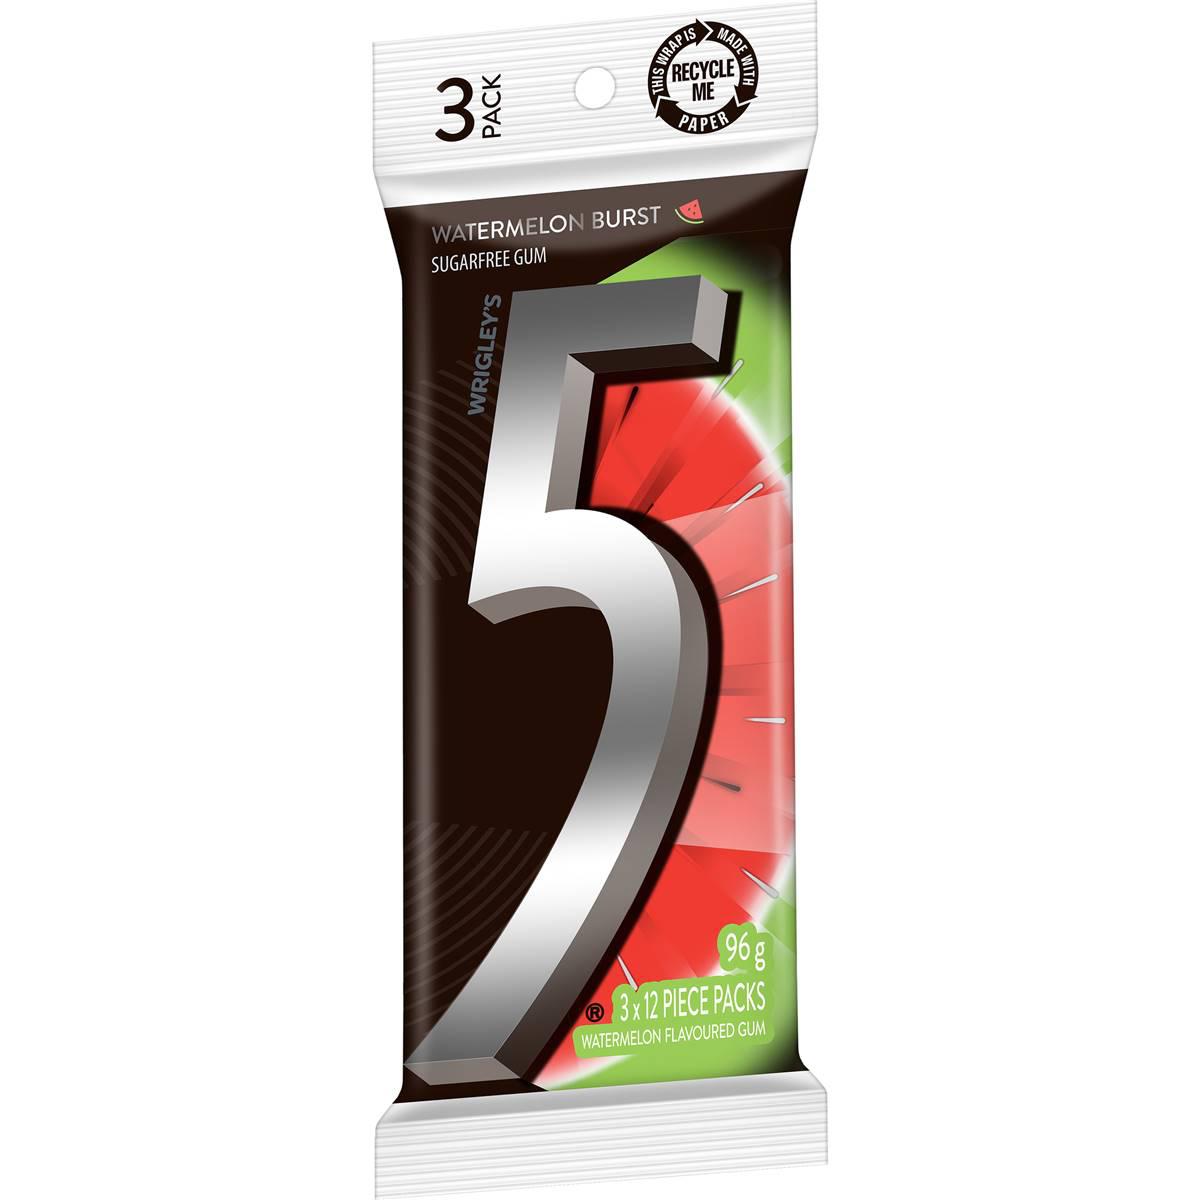 5gum Watermelon Burst Sugar Free Gum 96g